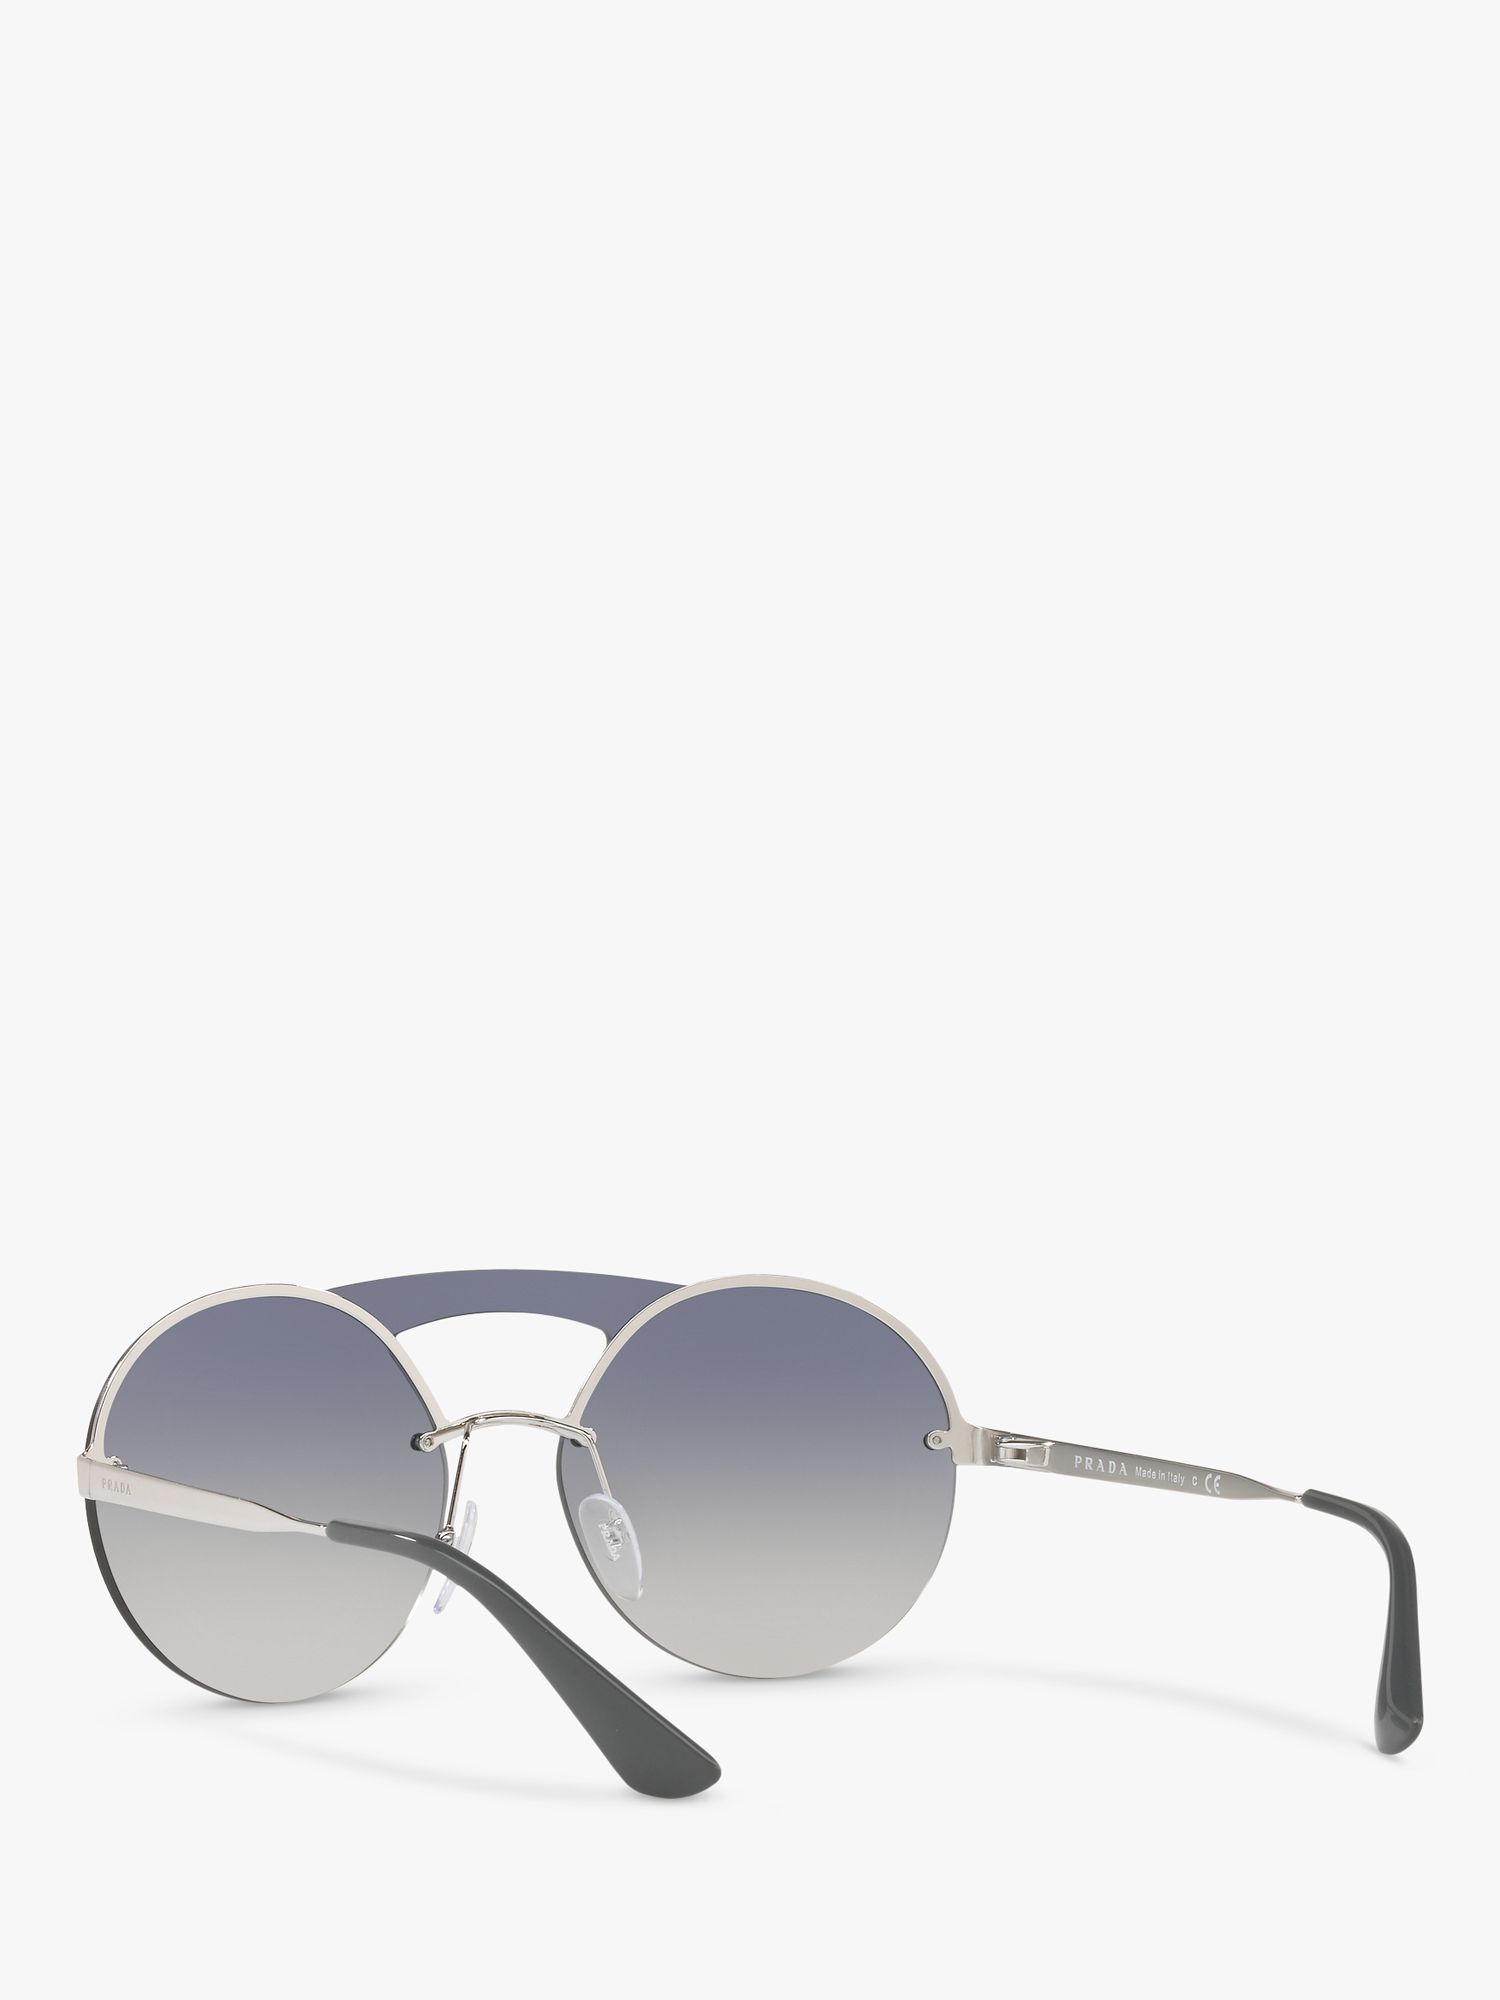 Prada PR 65TS Women's Catwalk Round Sunglasses, Silver/Mirror Blue at John  Lewis u0026 Partners